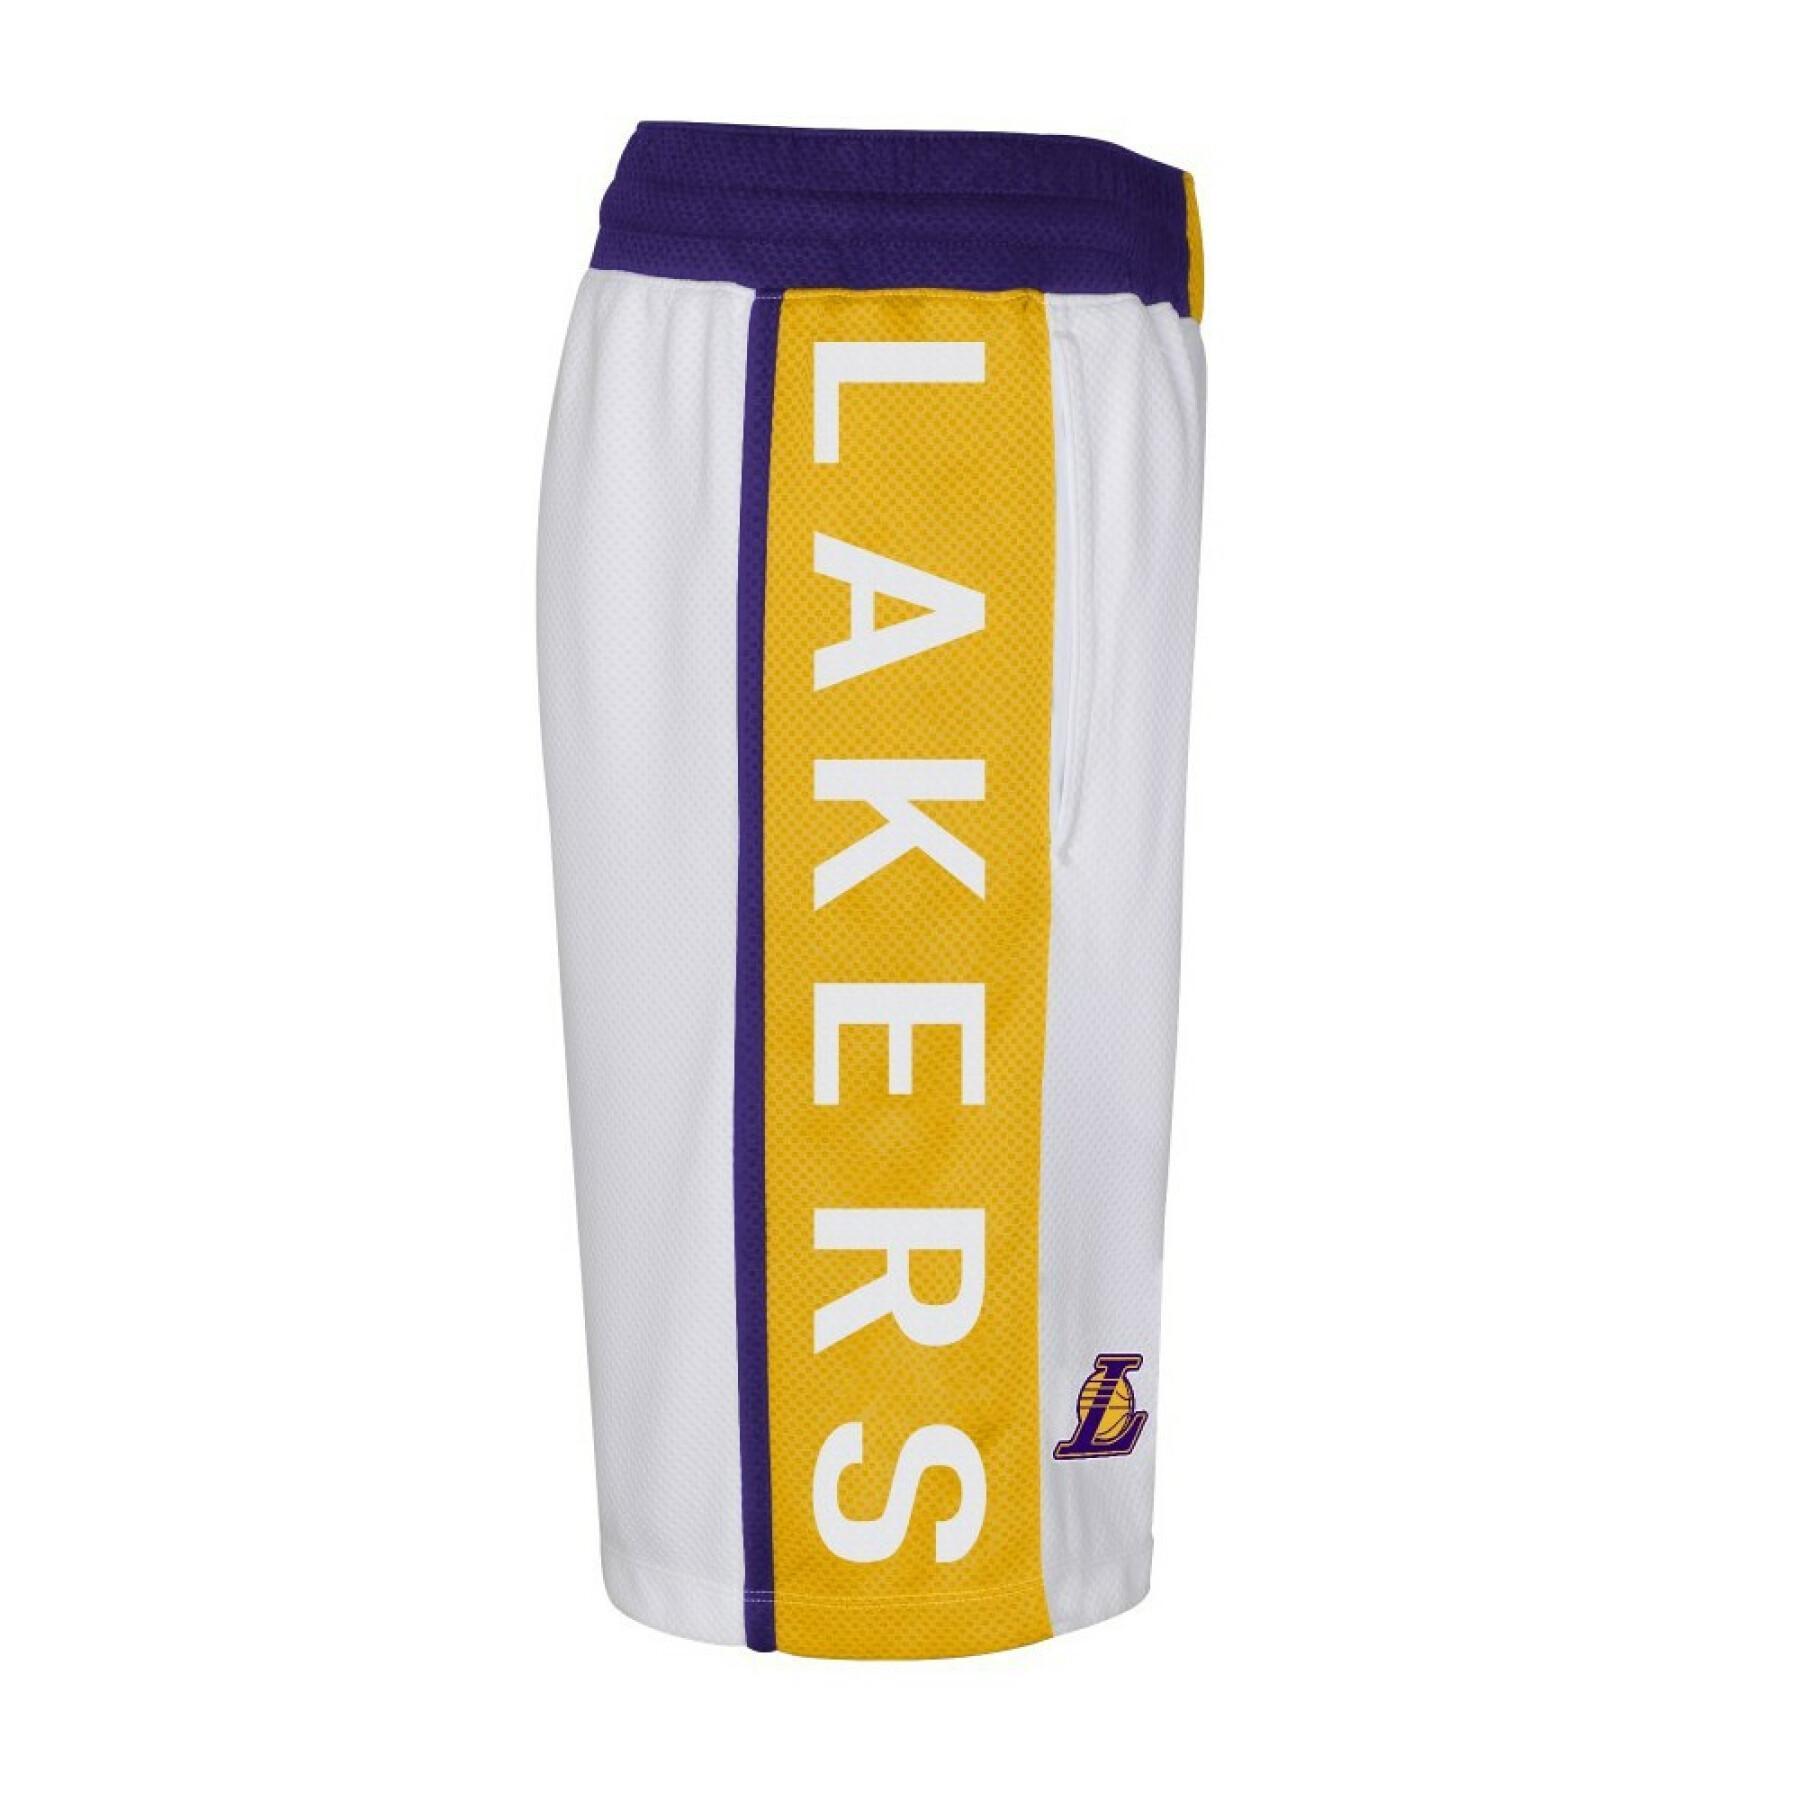 Basketshorts Los Angeles Lakers Lebron James